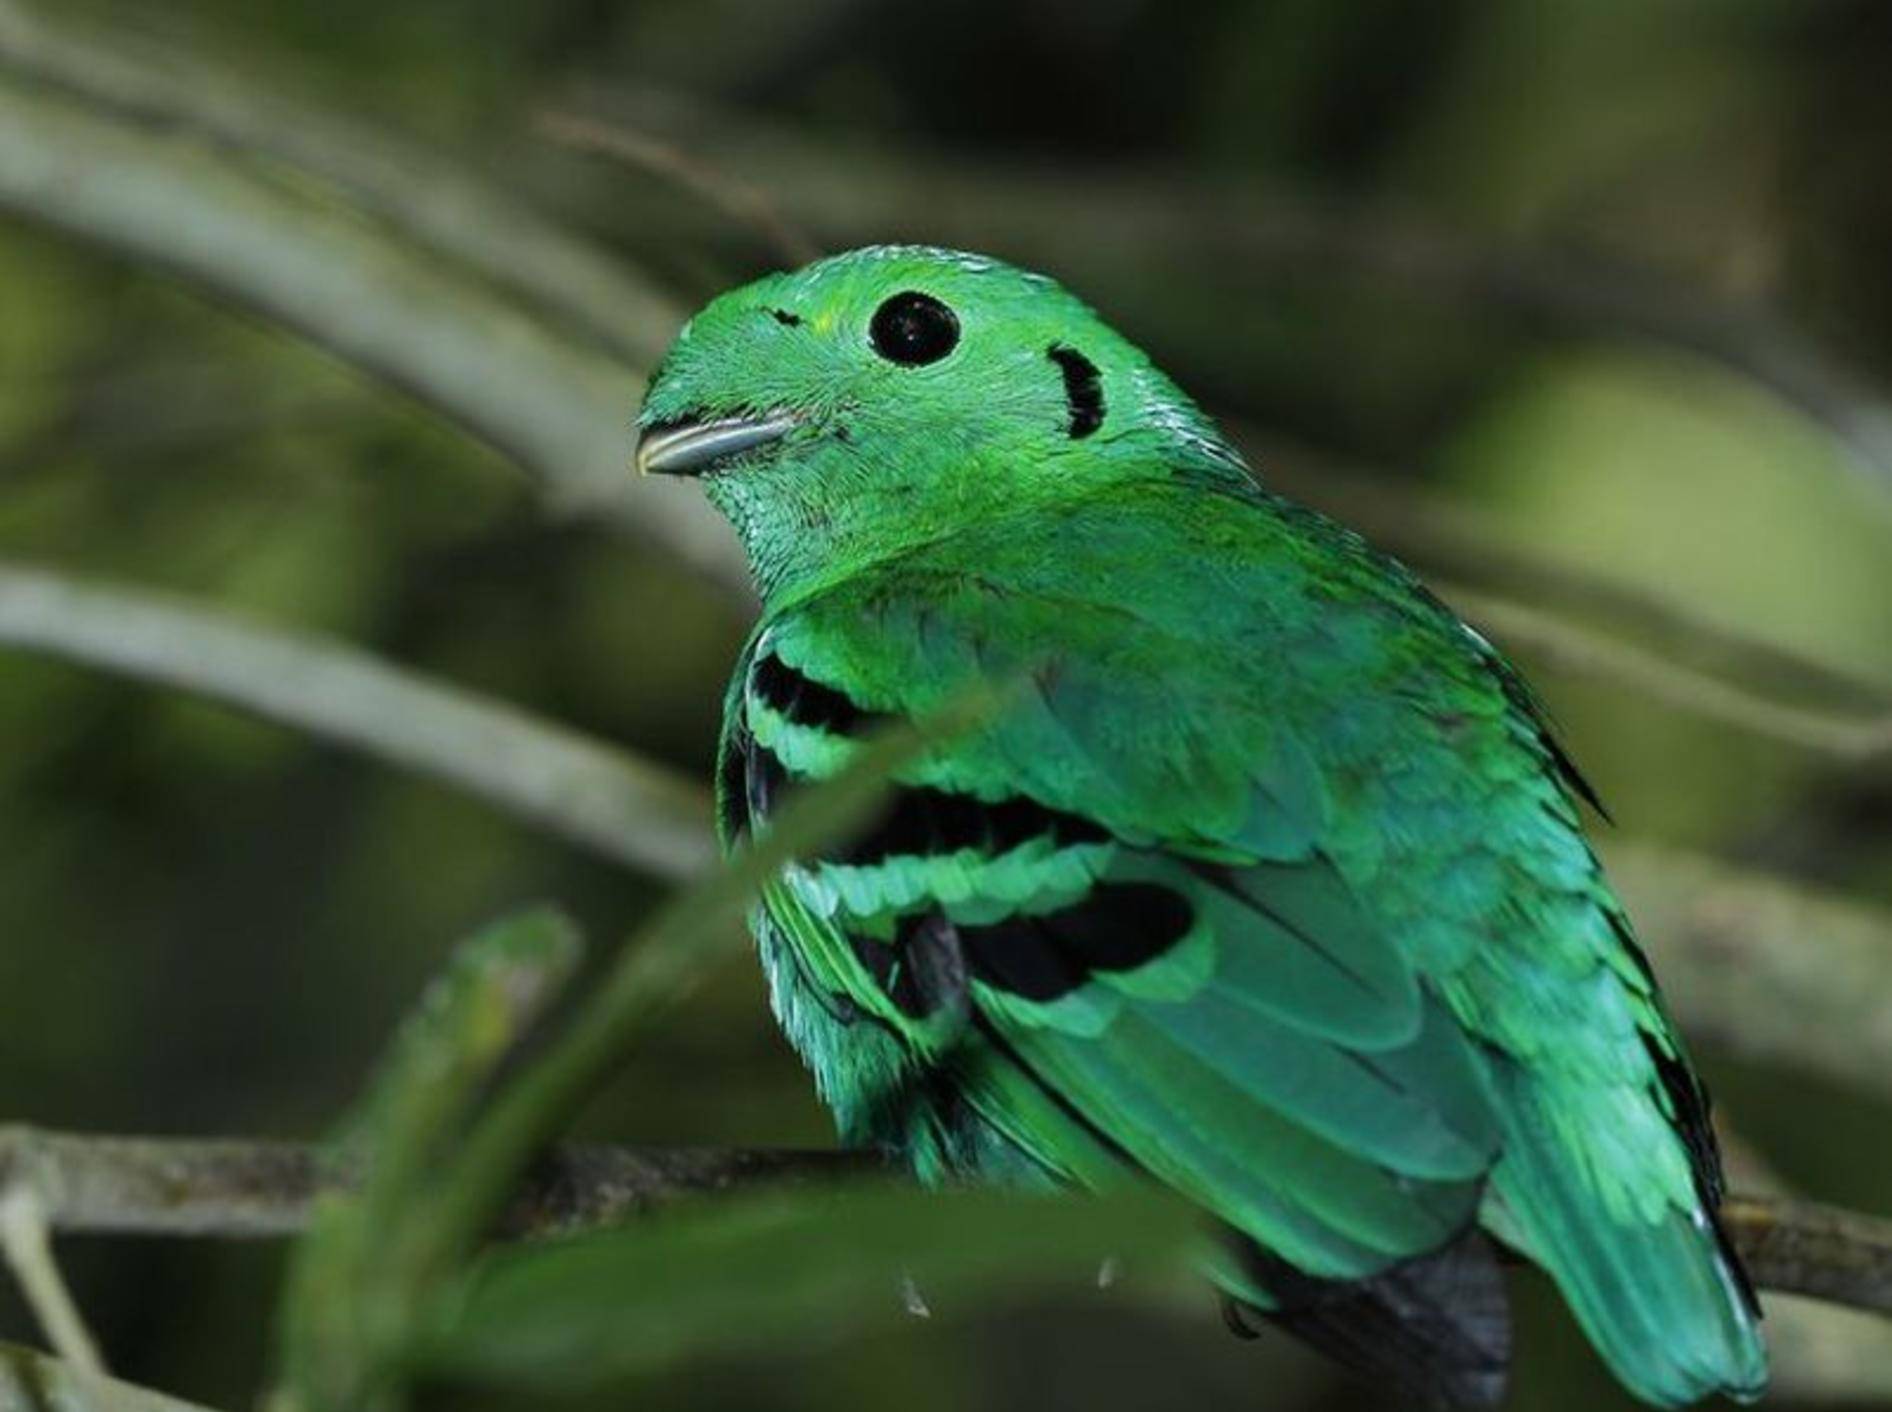 Toller Anblick: Grünkardinal Vogel mit extravagantem Look